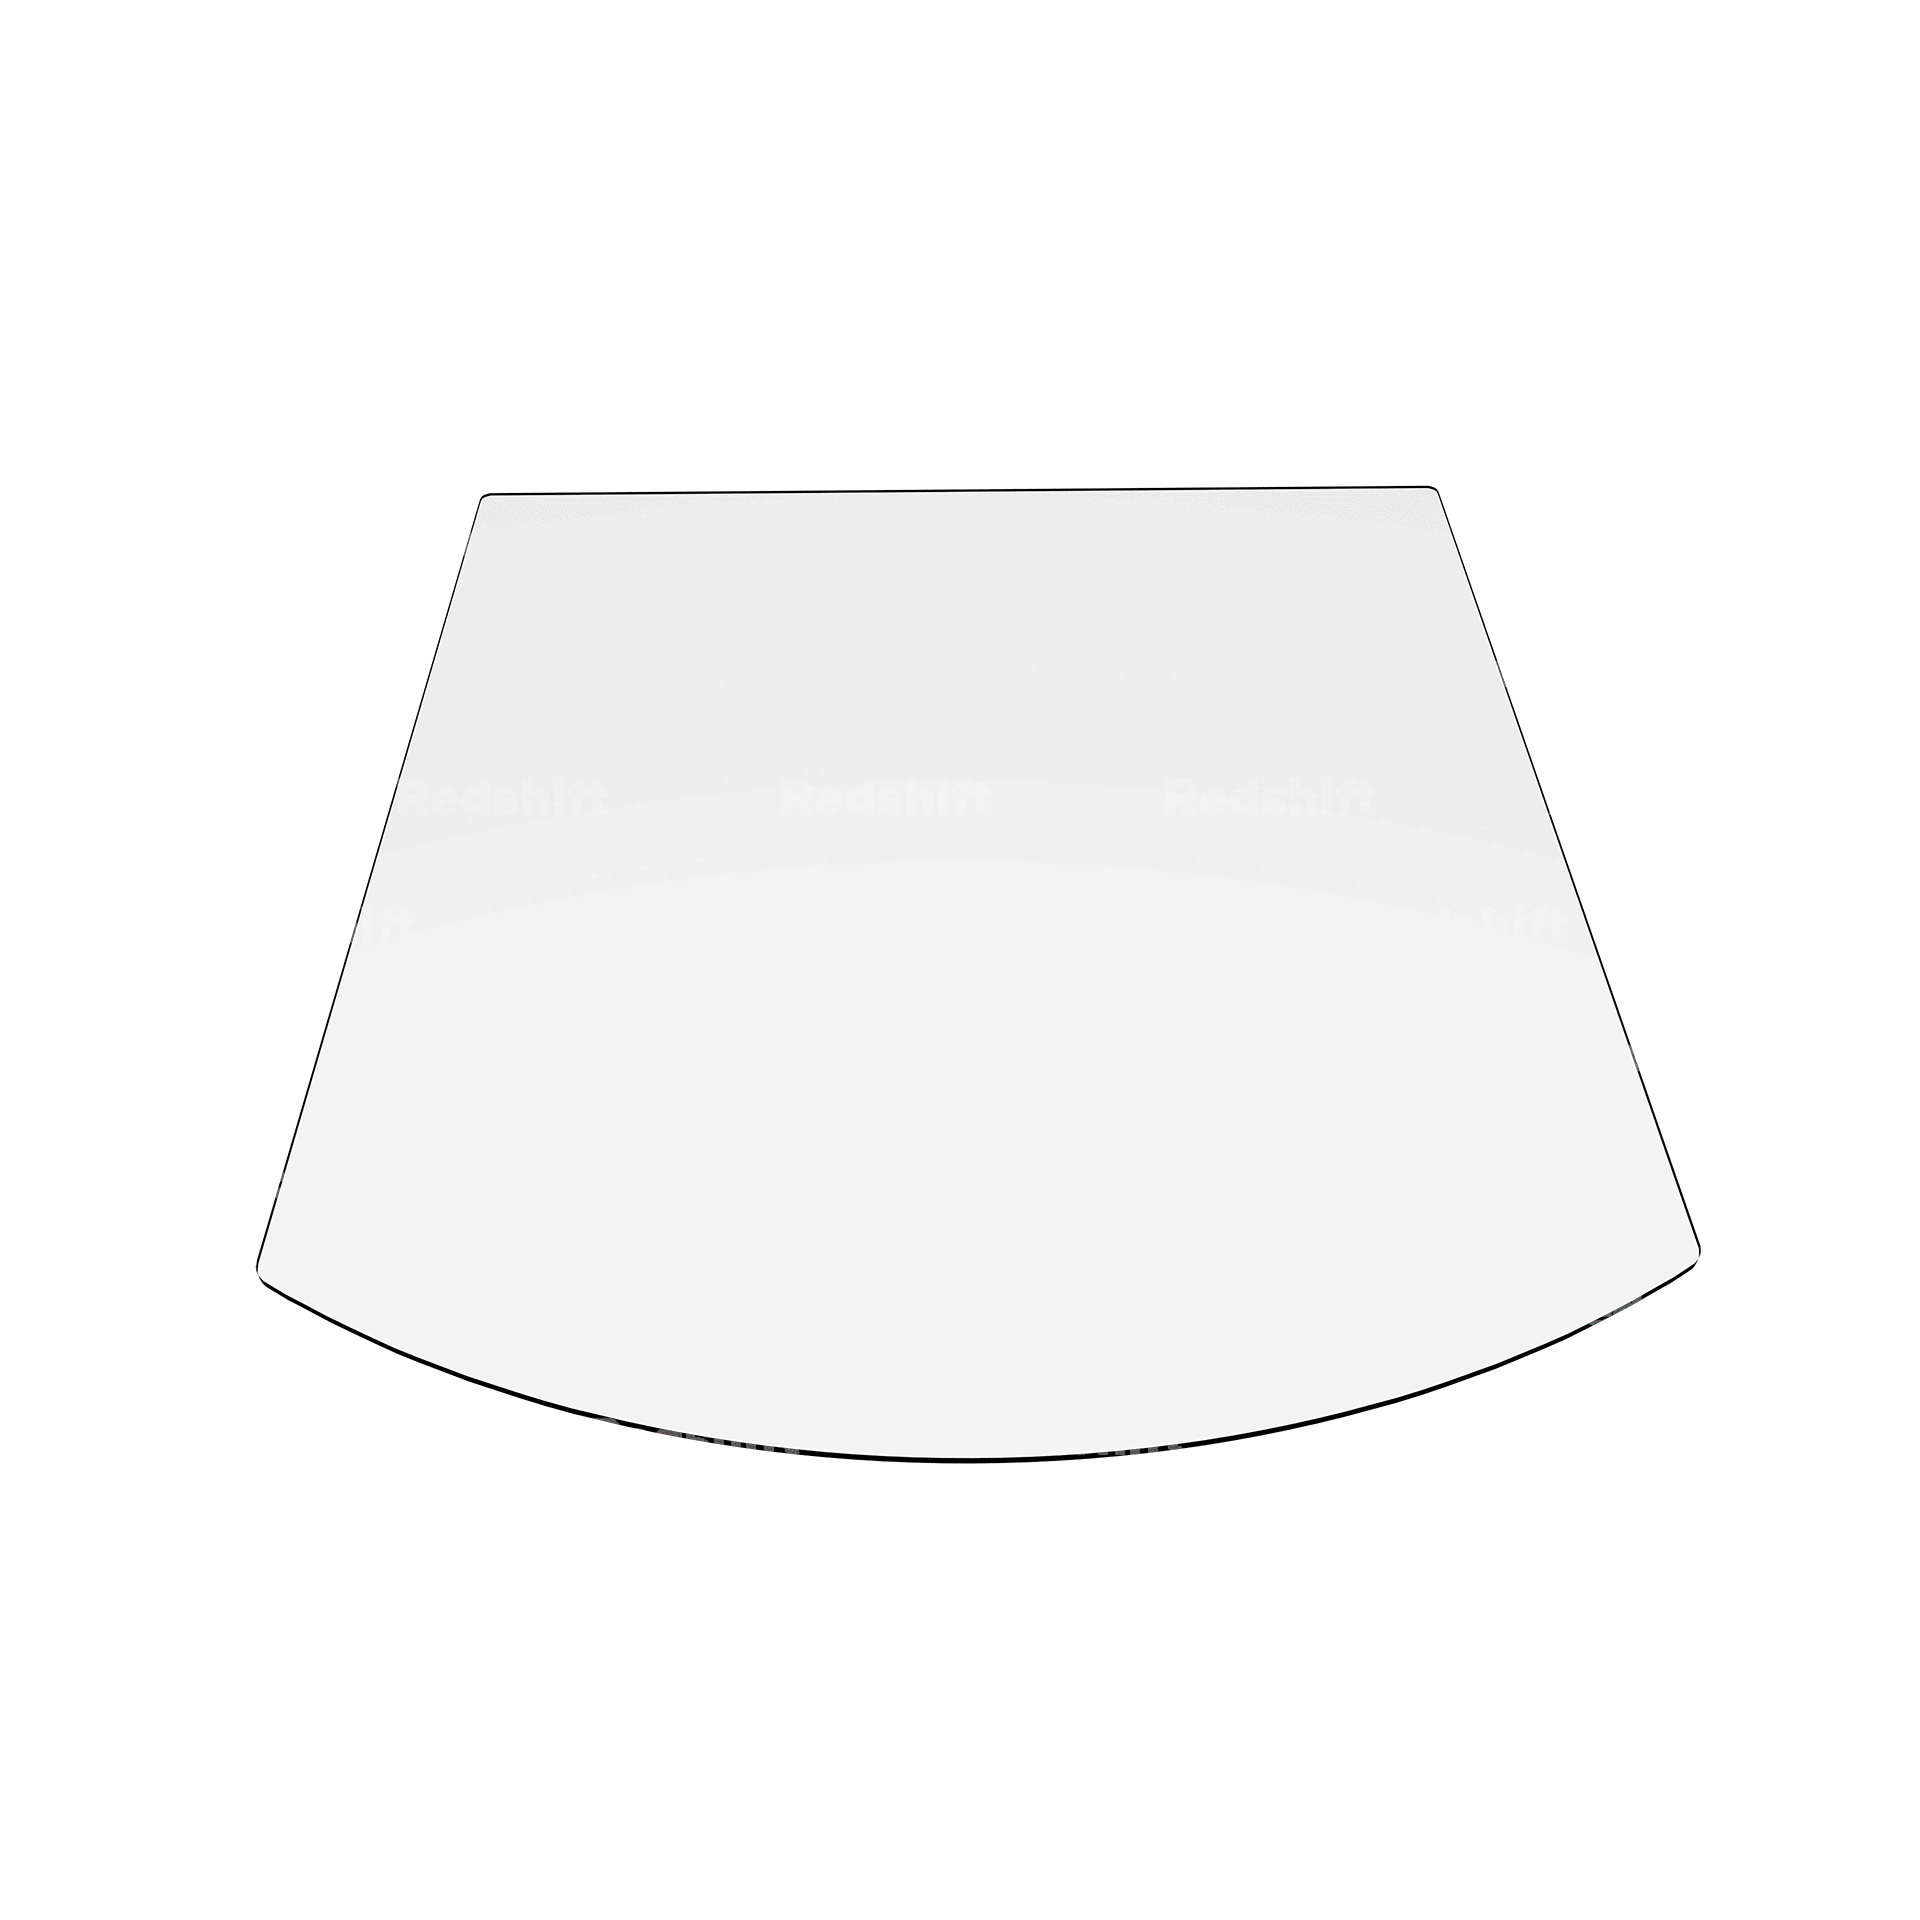 Product image of Classic Universal floorpad (3535-0102)